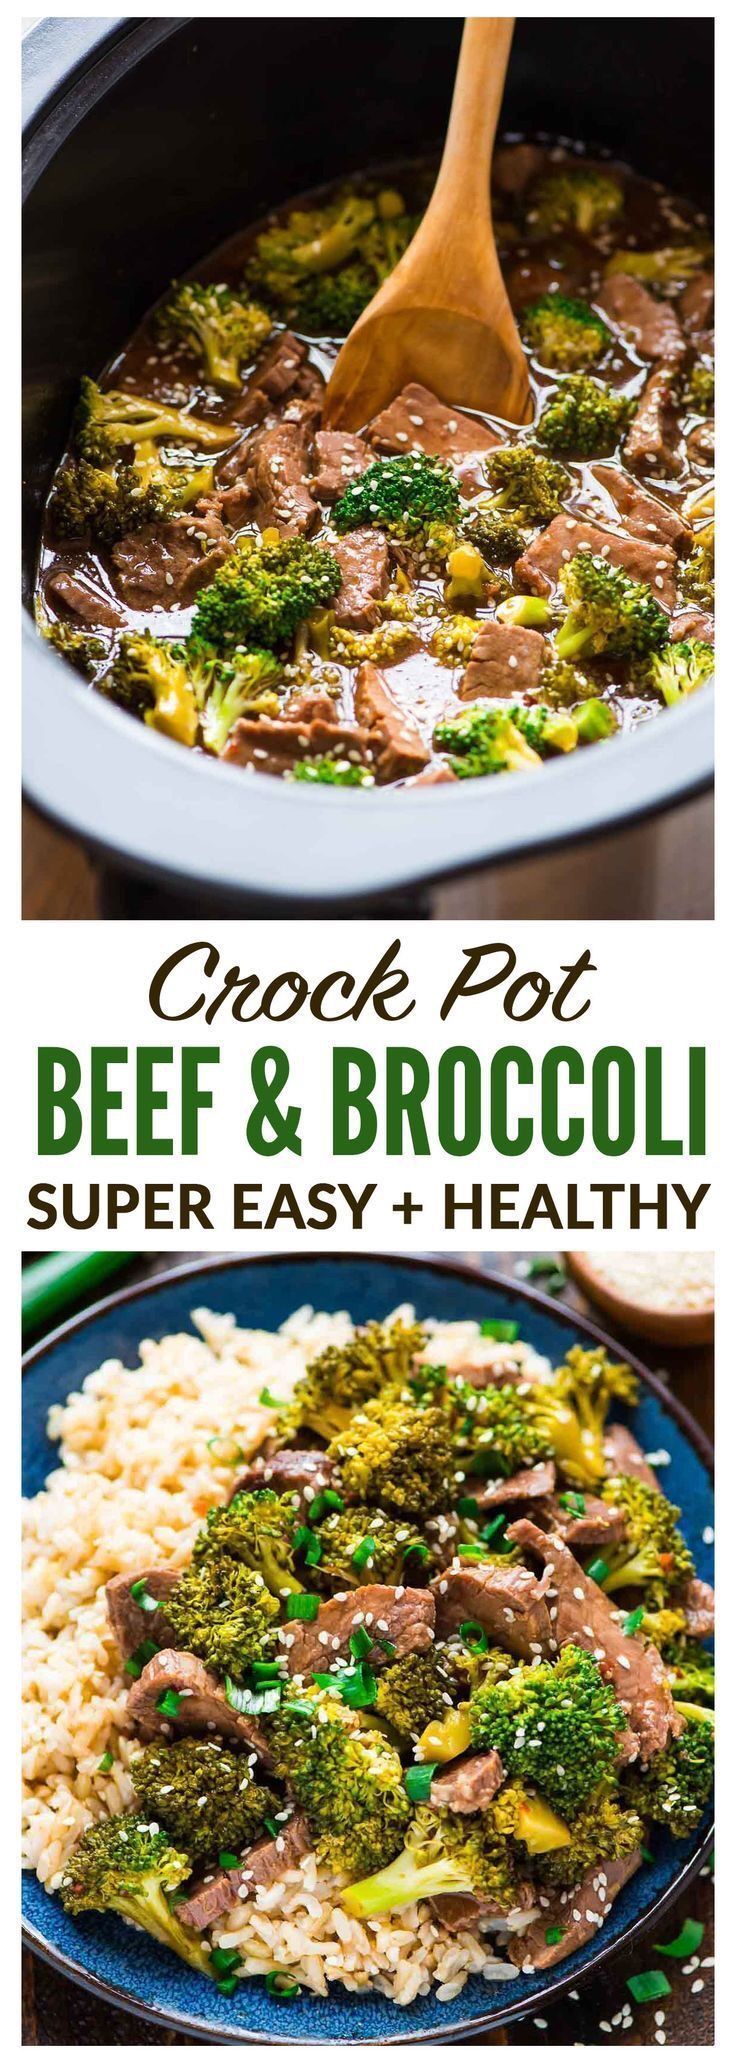 Crockpot Beef and Broccoli – WellPlated.com -   19 dinner recipes easy crockpot ideas